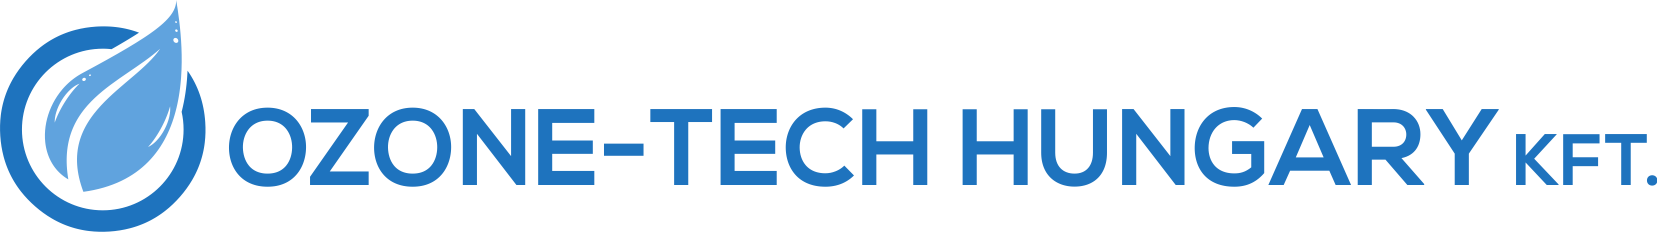 ozone-tech-hungary_logo